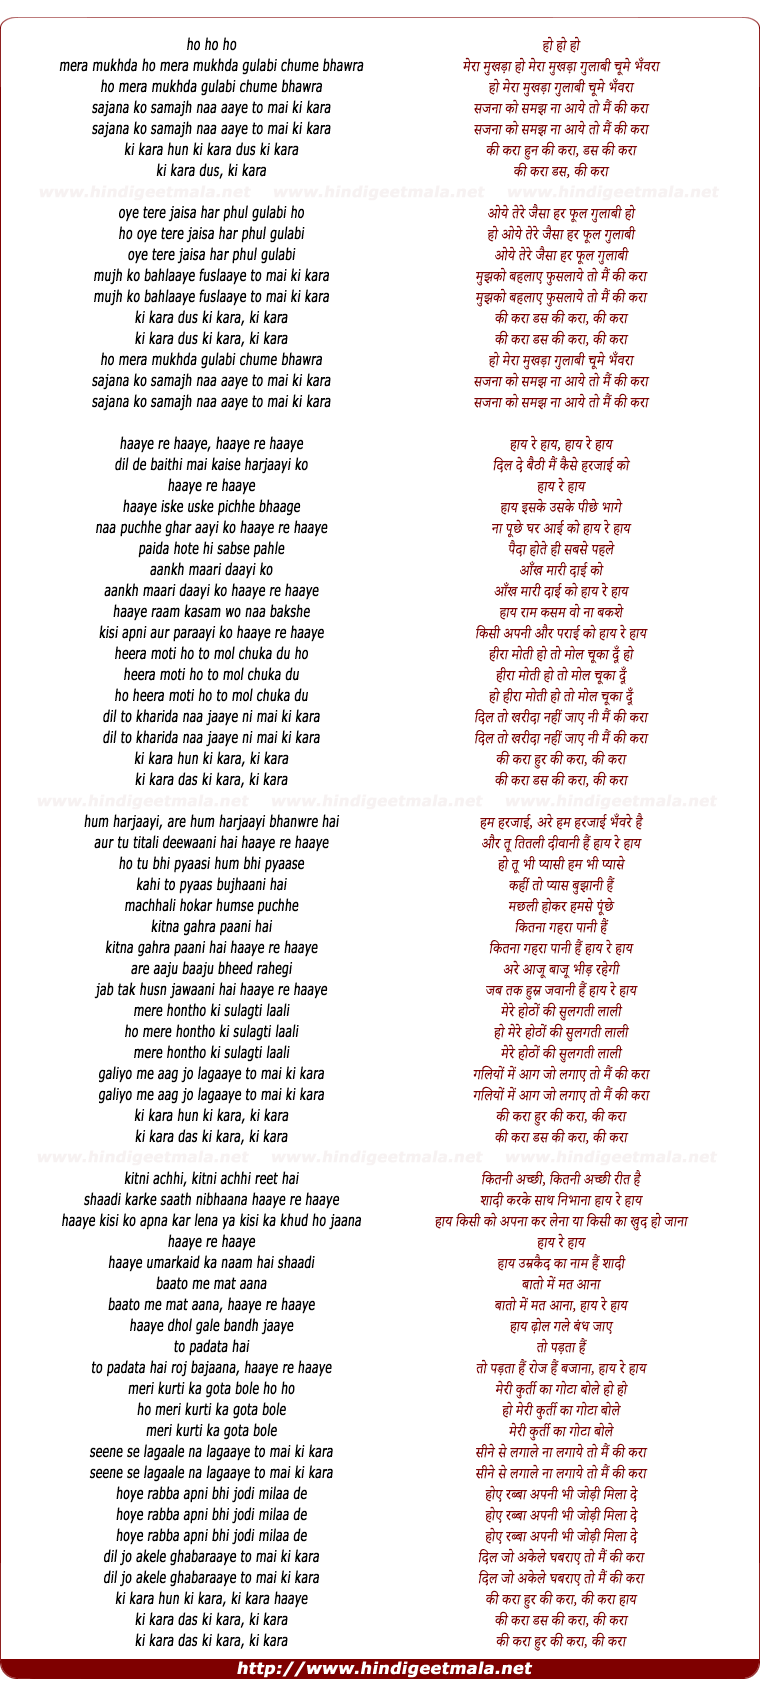 lyrics of song Ki Karan Dus Ki Karan